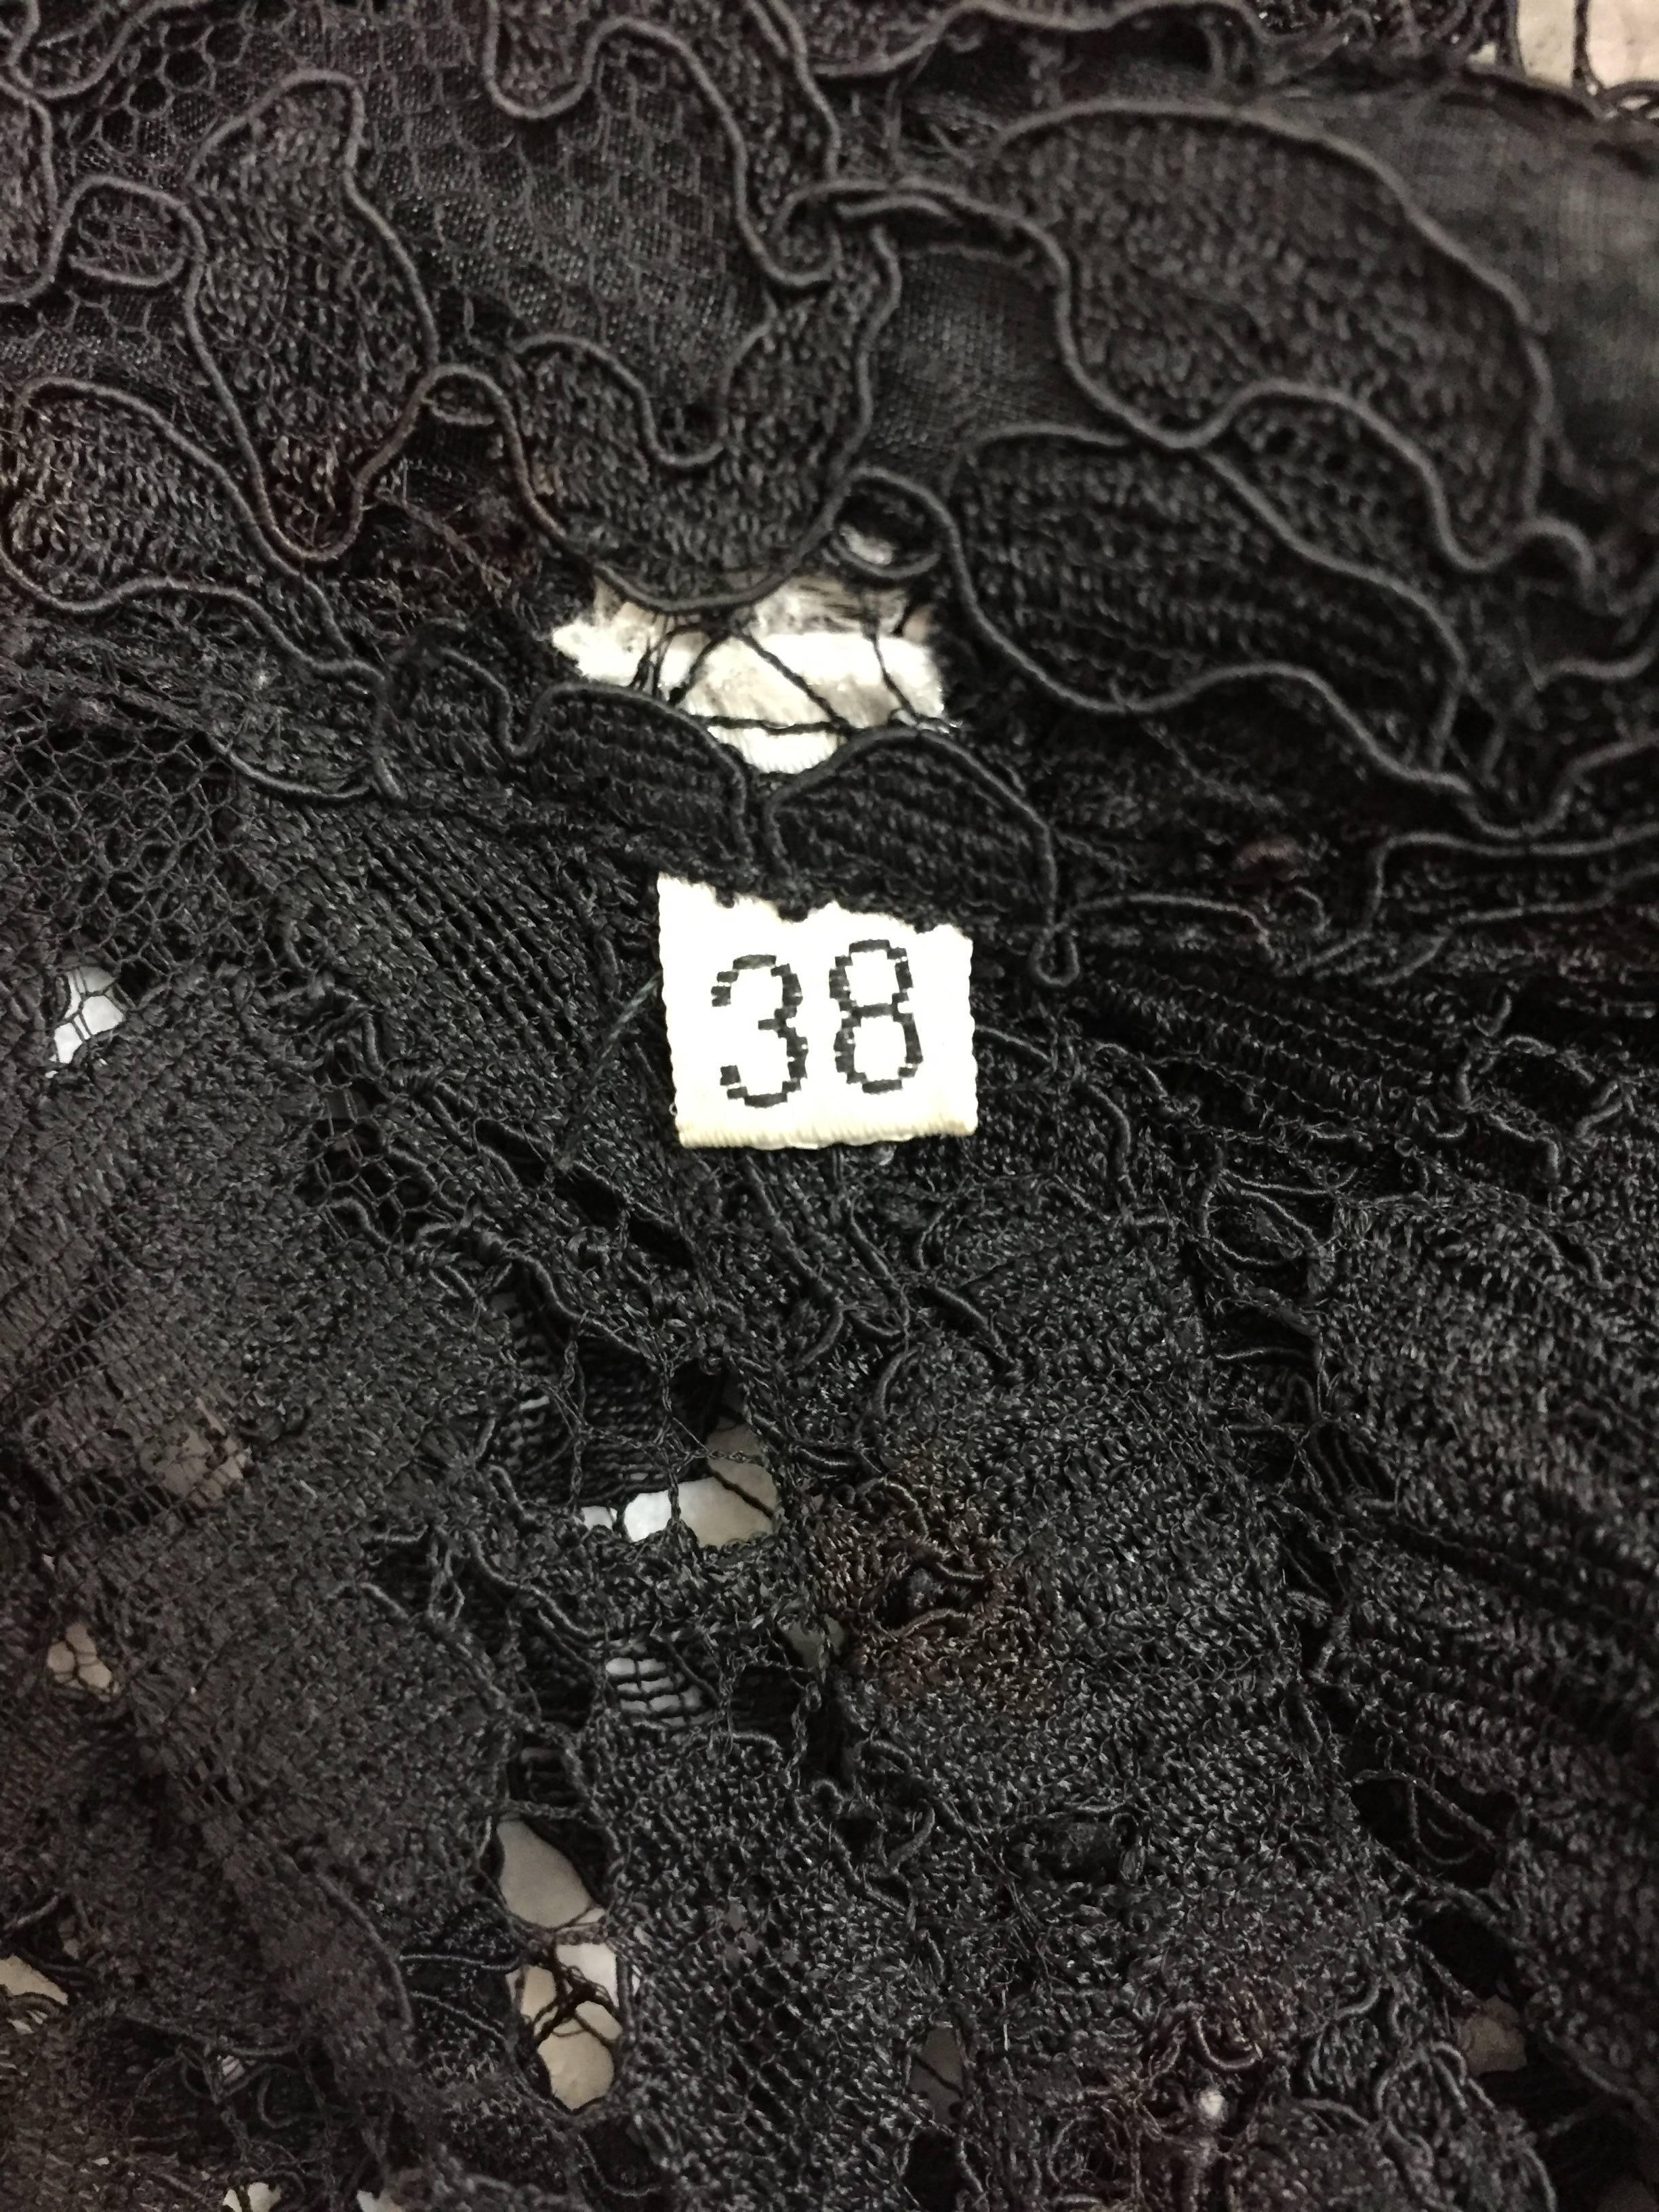 Women's S/S 1994 Gianni Versace Couture Black Sheer Guipure Lace L/S Shirt Dress 38